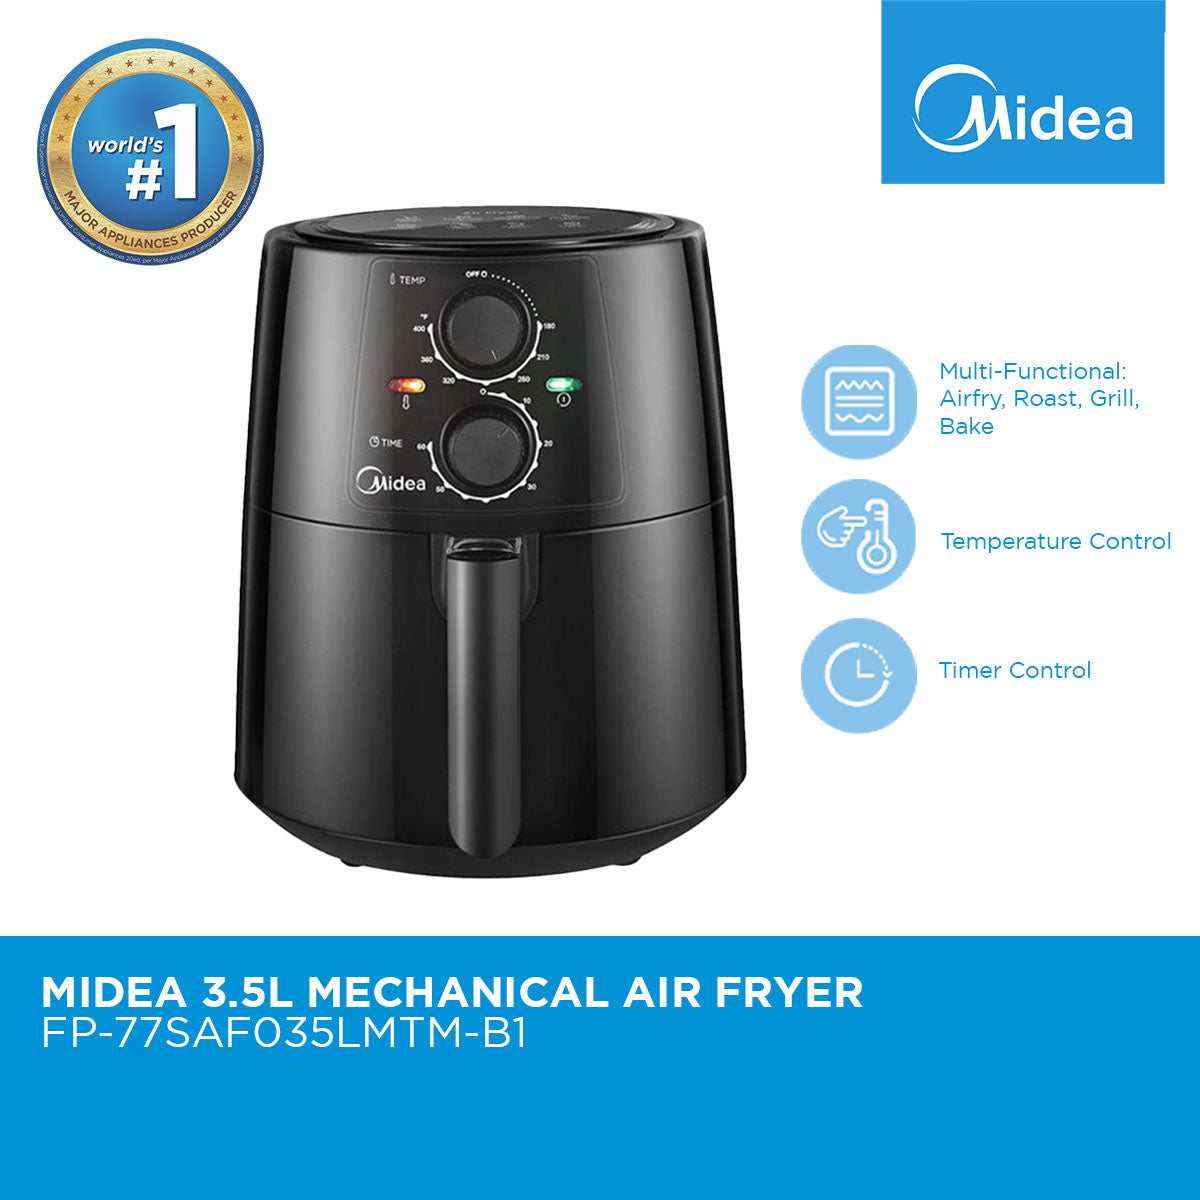 Midea 3.5L Mechanical Air Fryer with Rapid Air Circulation Technology